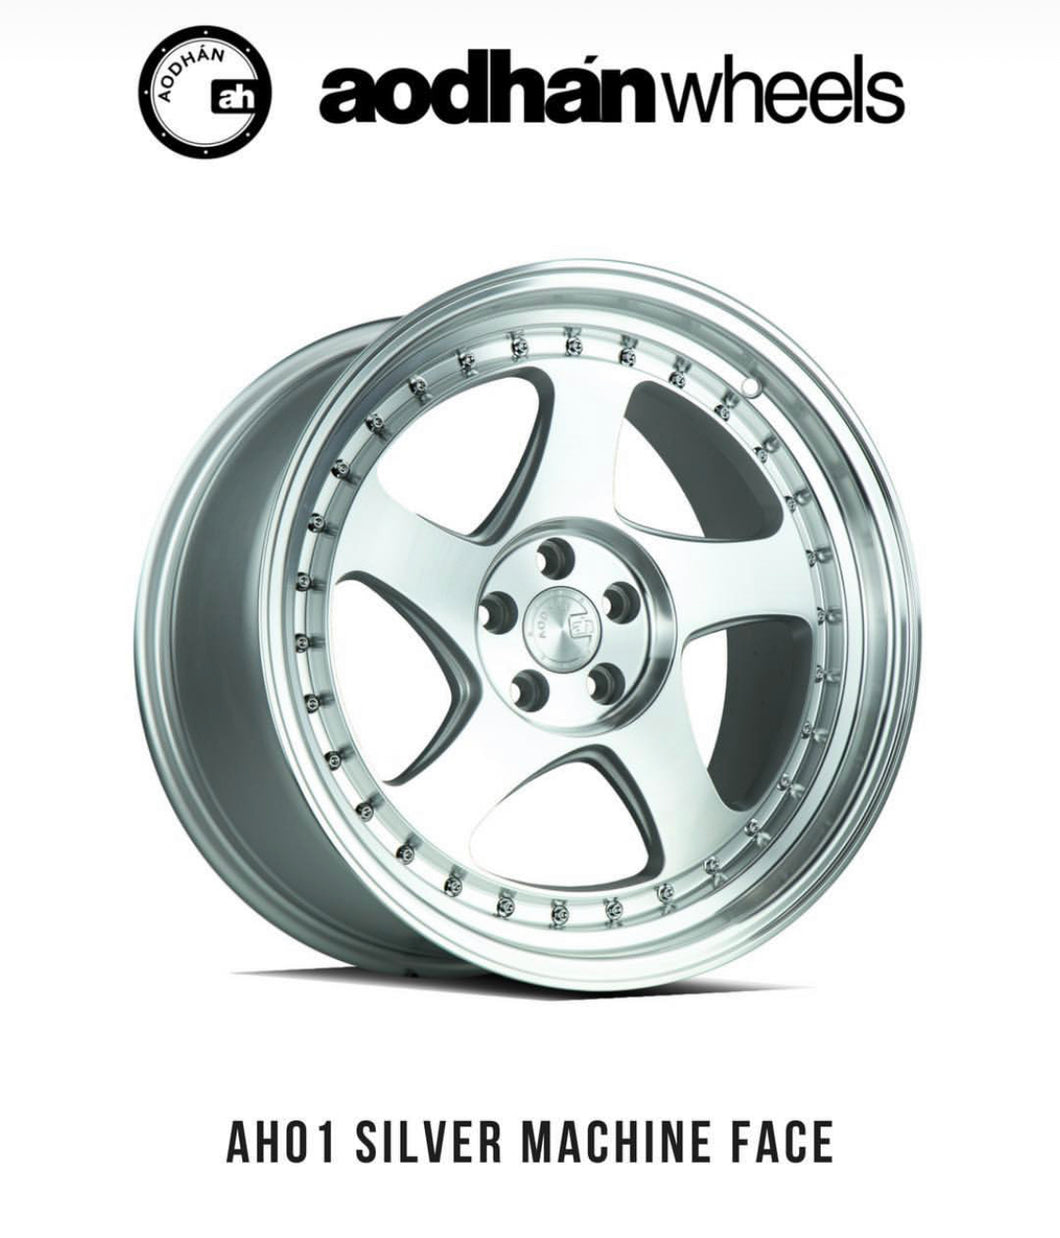 Aodhan ah01 silver machined